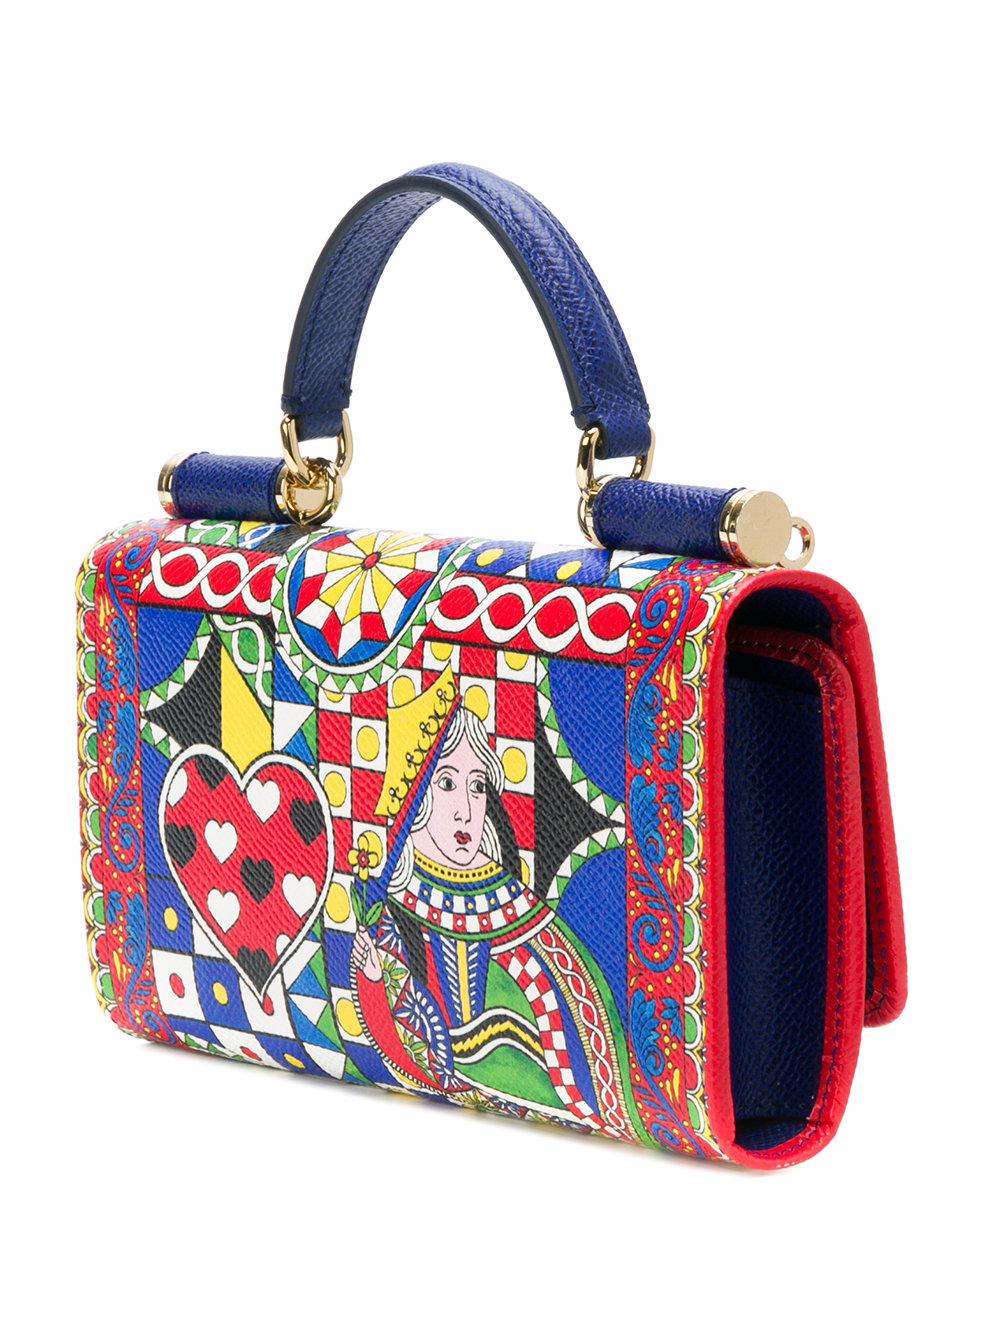 Dolce&Gabbana Multicolor Limited Edition Bag